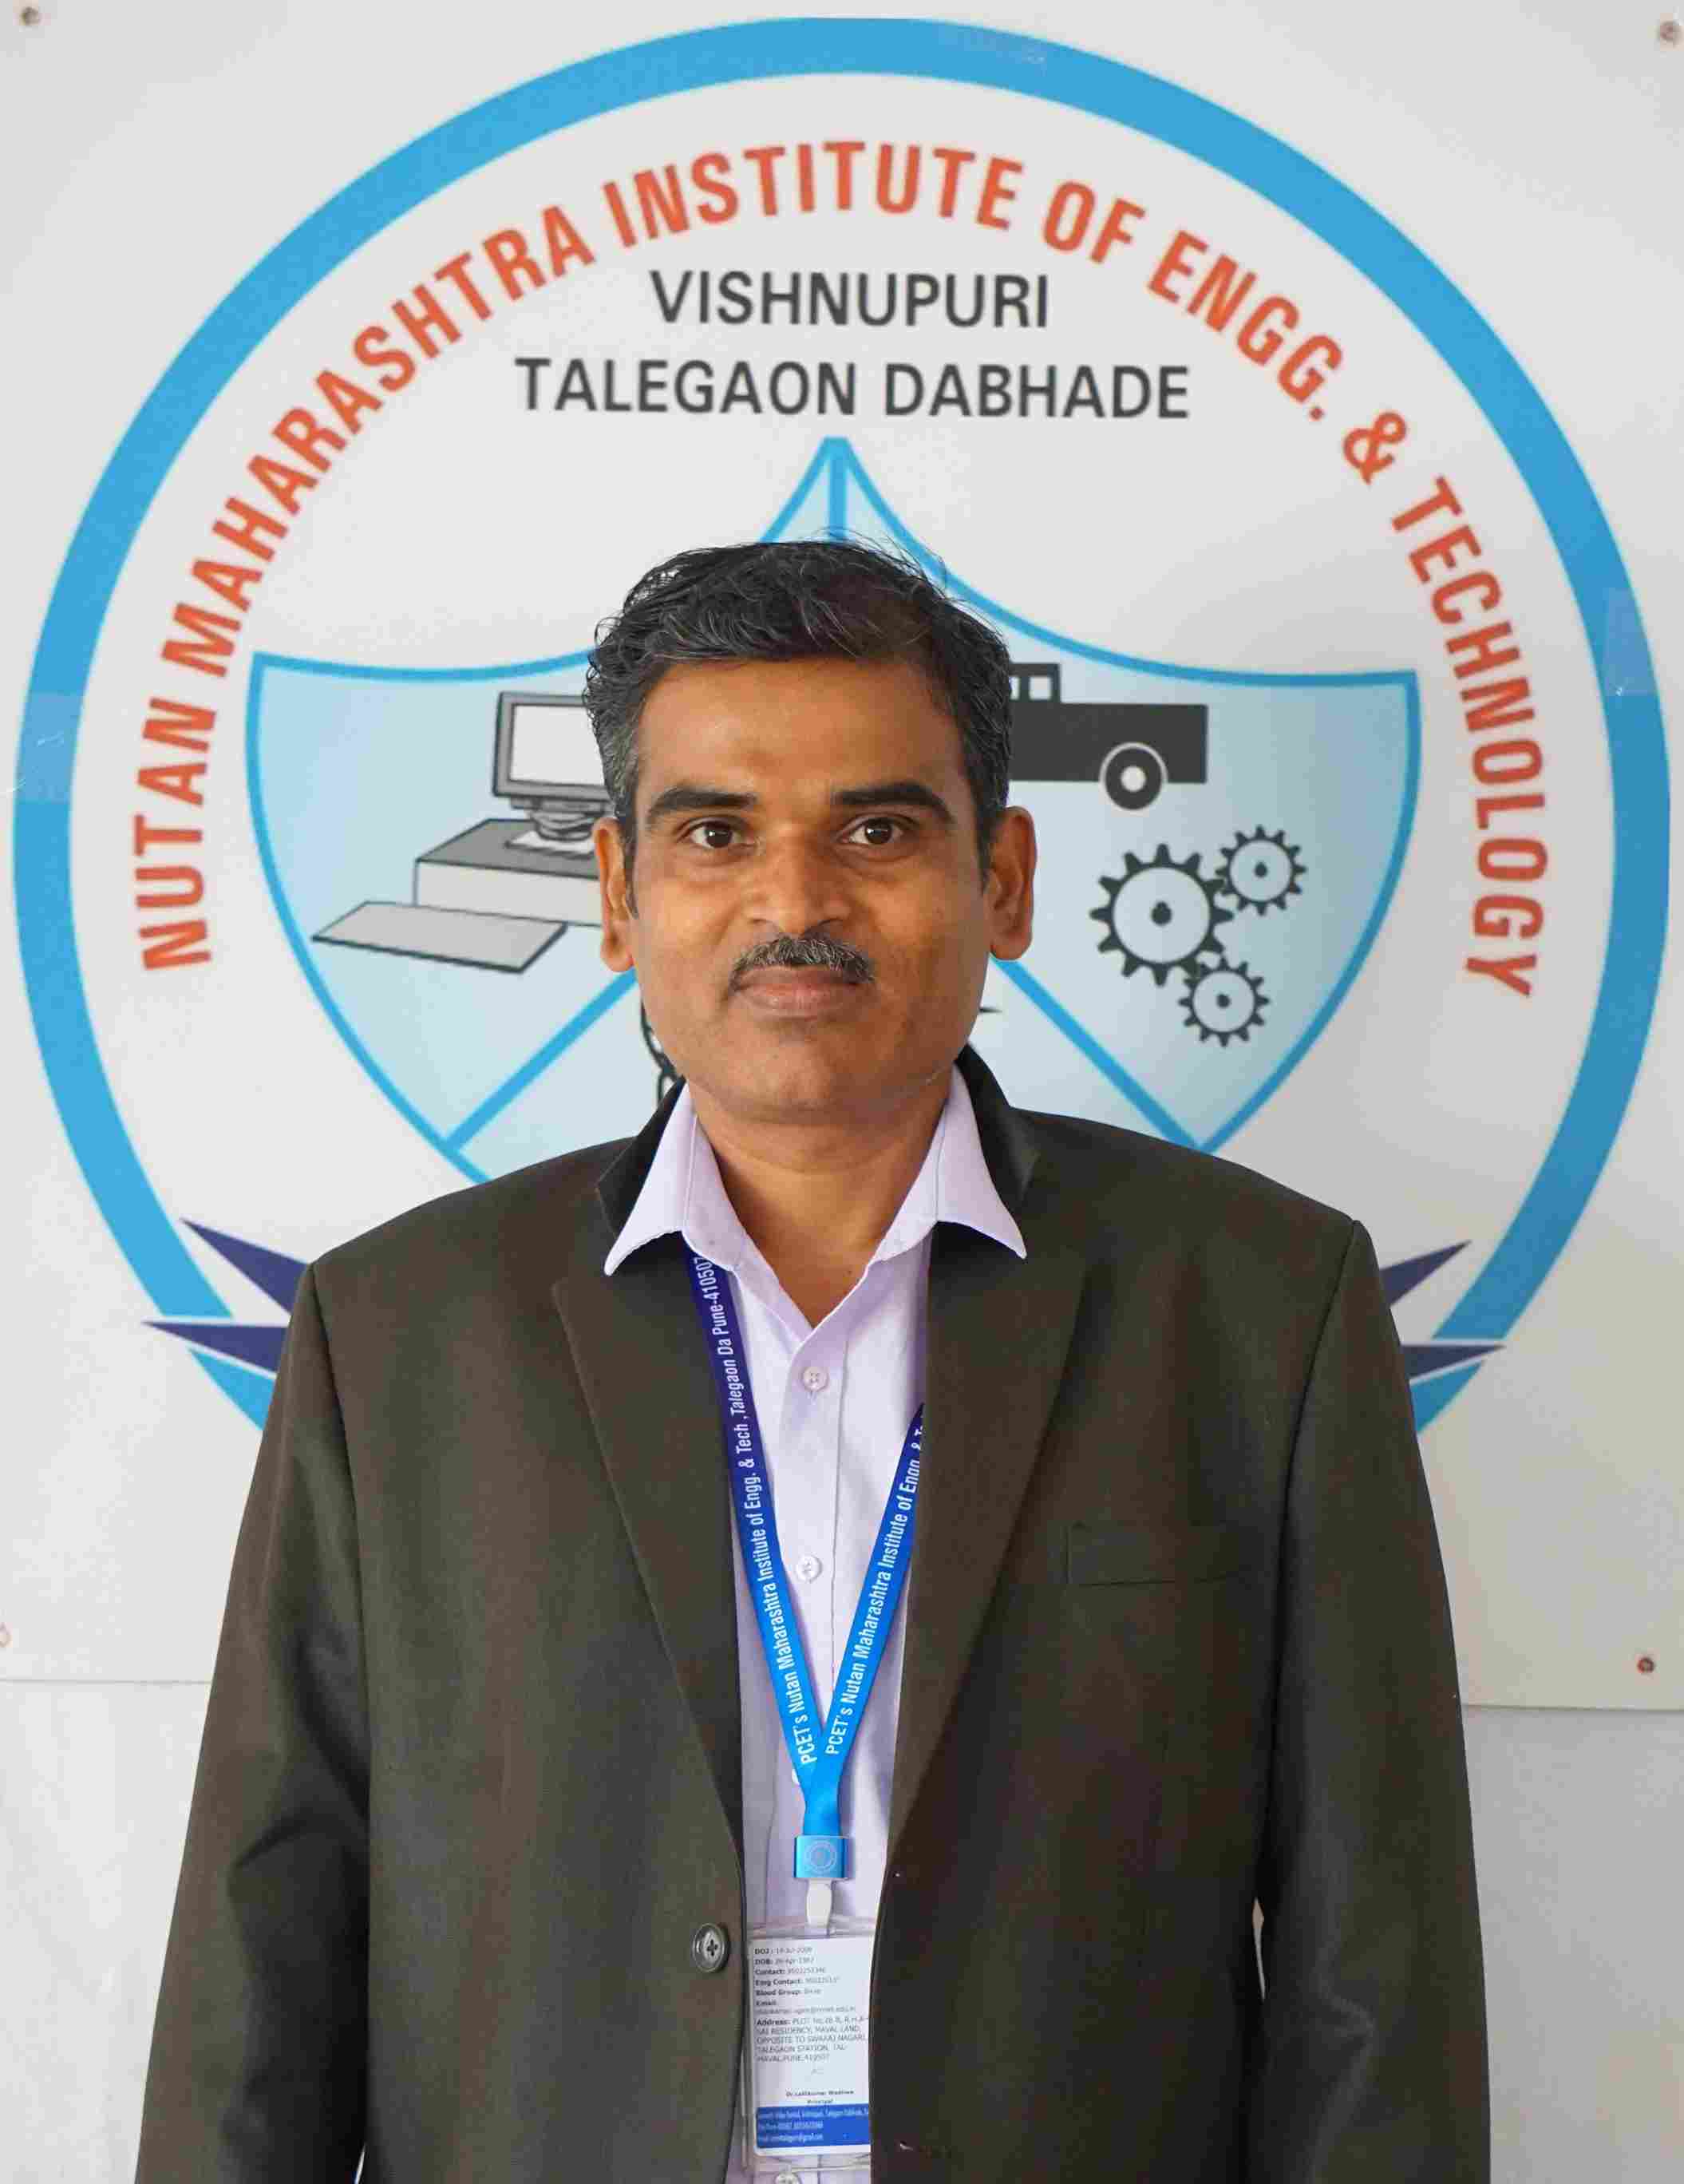 Prof. Shankarrao Ugale